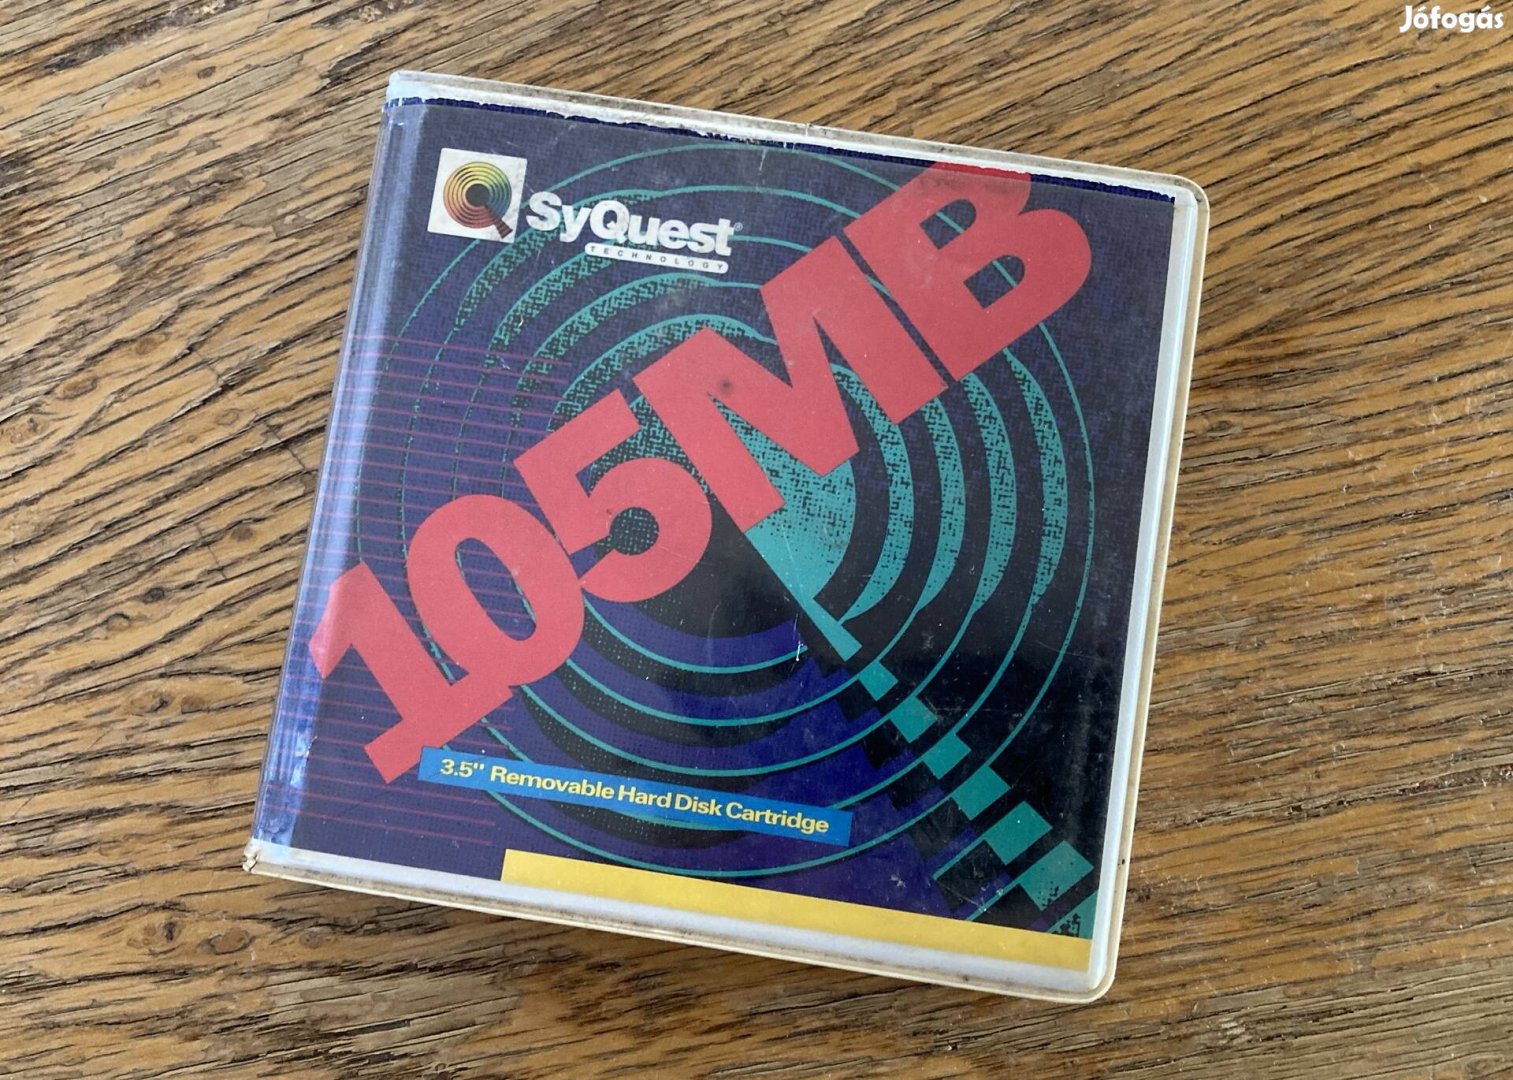 Syquest 105 MB 3.5" Removable Hard Disc Cartridge - adattároló